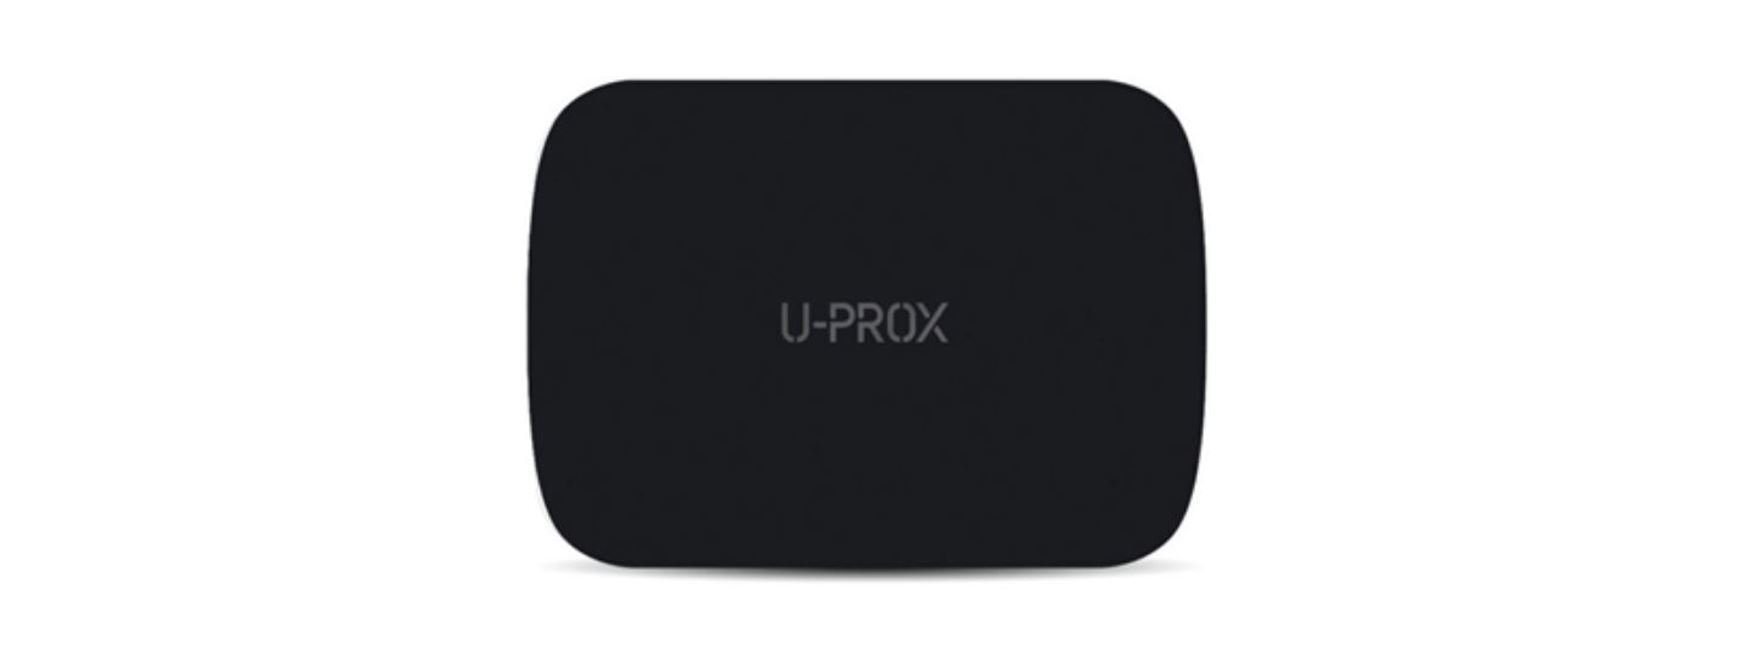 U-PROX MP Wireless Security Control Panel